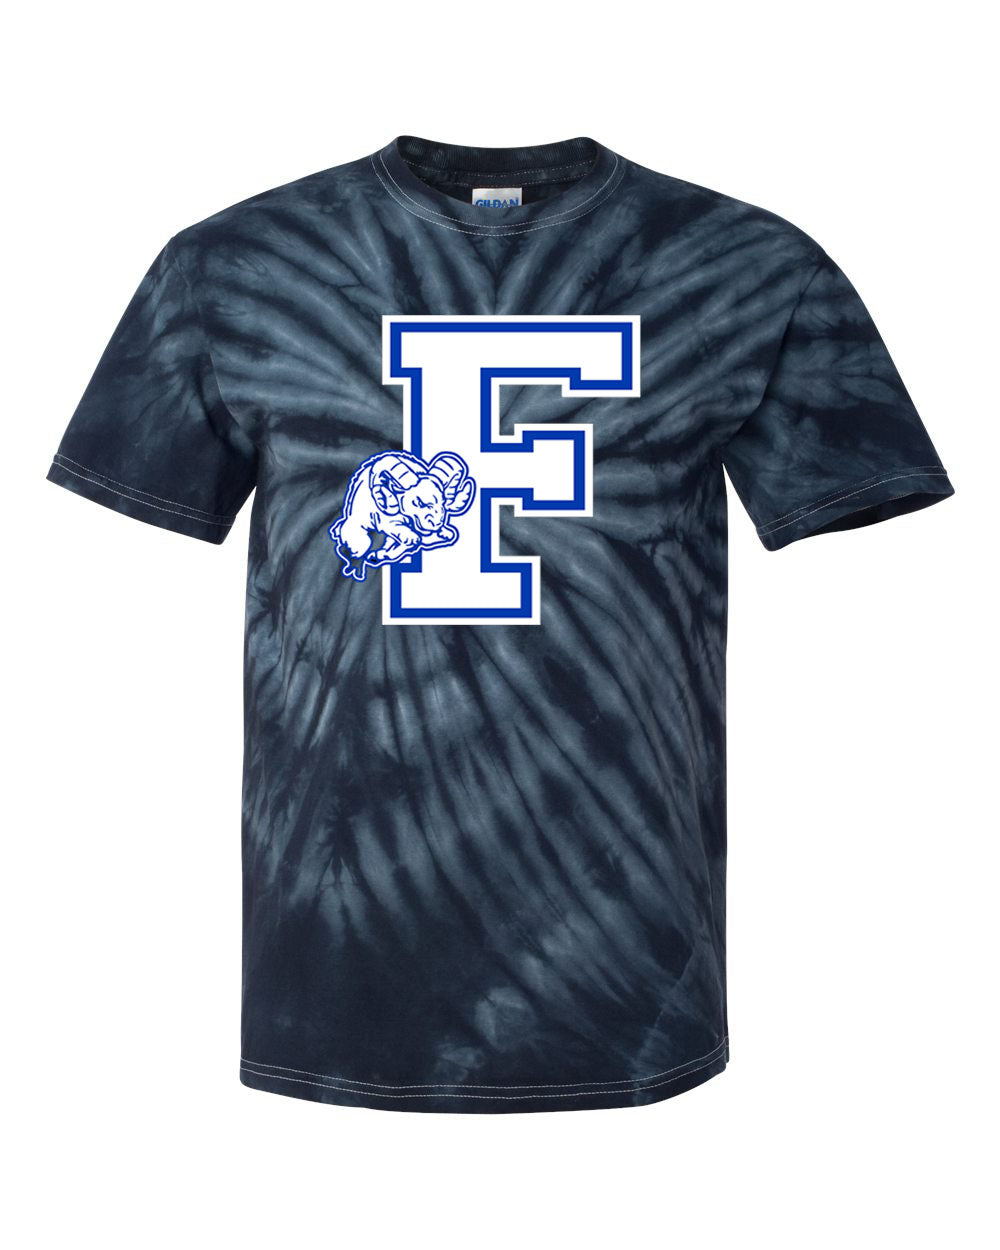 Franklin School Tie Dye t-shirt Design 1